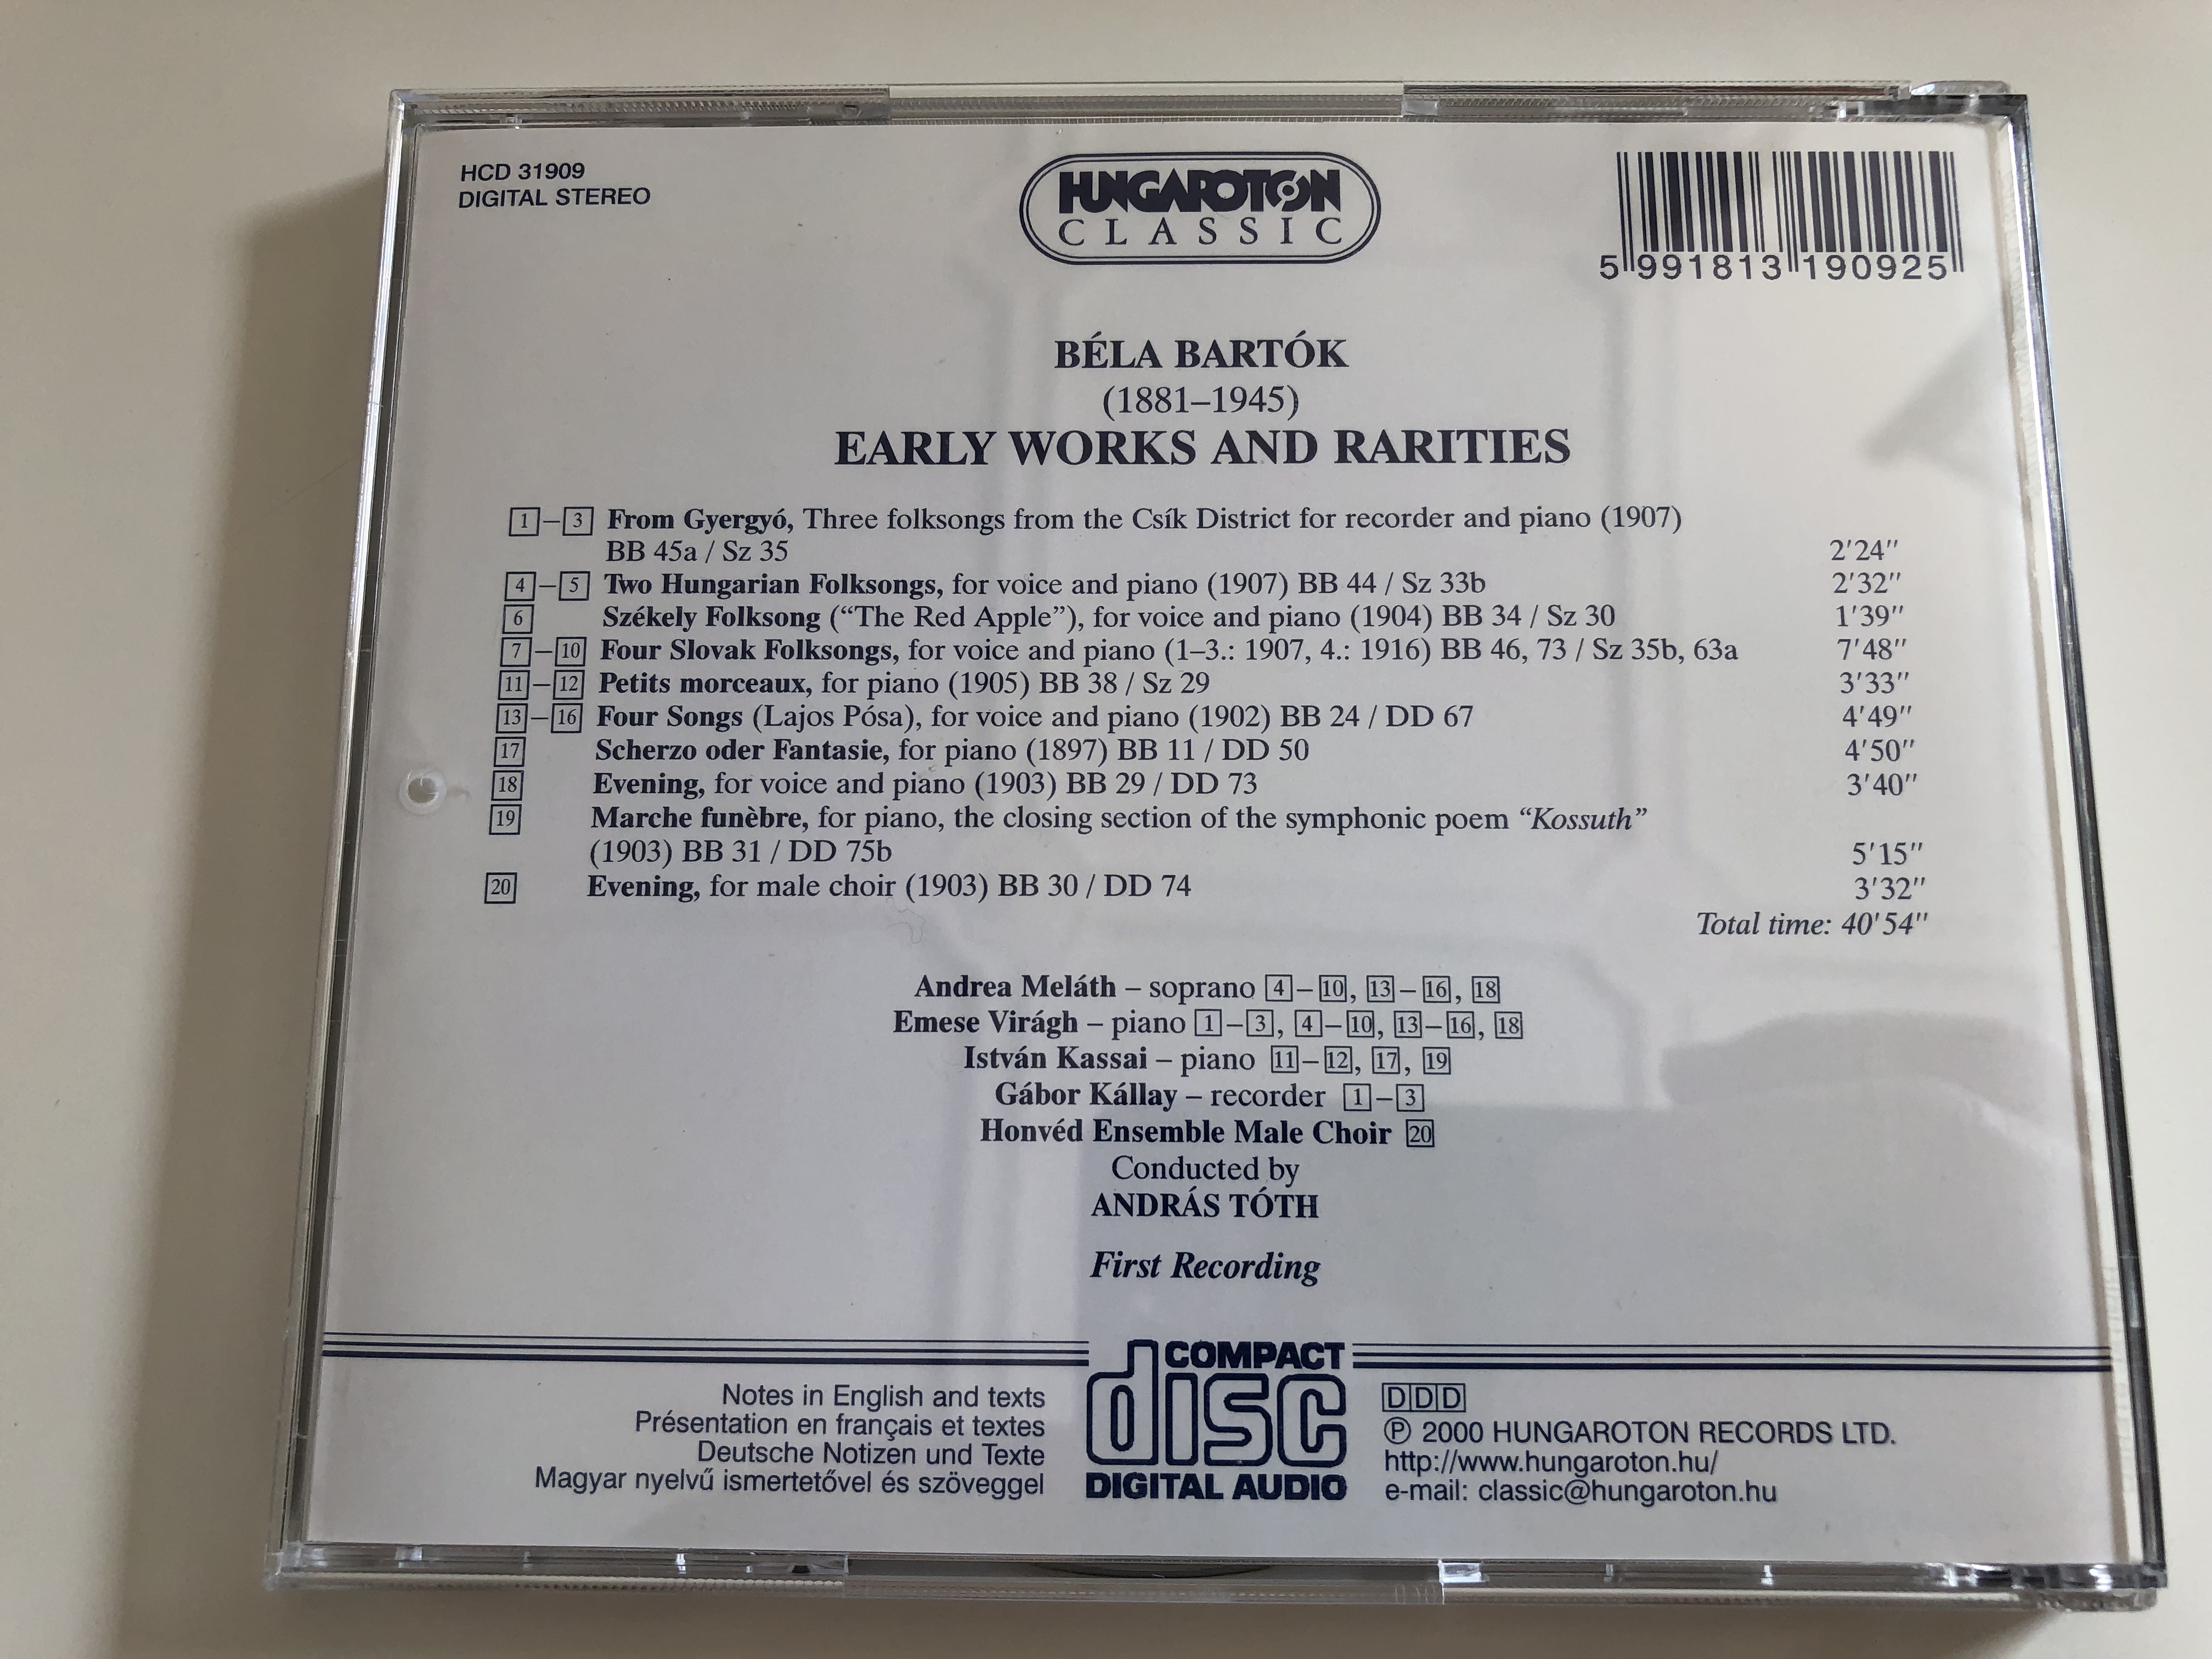 bart-k-early-works-and-rarities-first-recorded-two-hungarian-folk-songs-sz-kely-folk-songs-four-slovak-folk-songs-andrea-mel-th-emese-vir-g-honv-d-ensemble-male-choir-lead-by-andr-s-t-th-audio-cd-2000-hcd-31909-2097210-.jpg